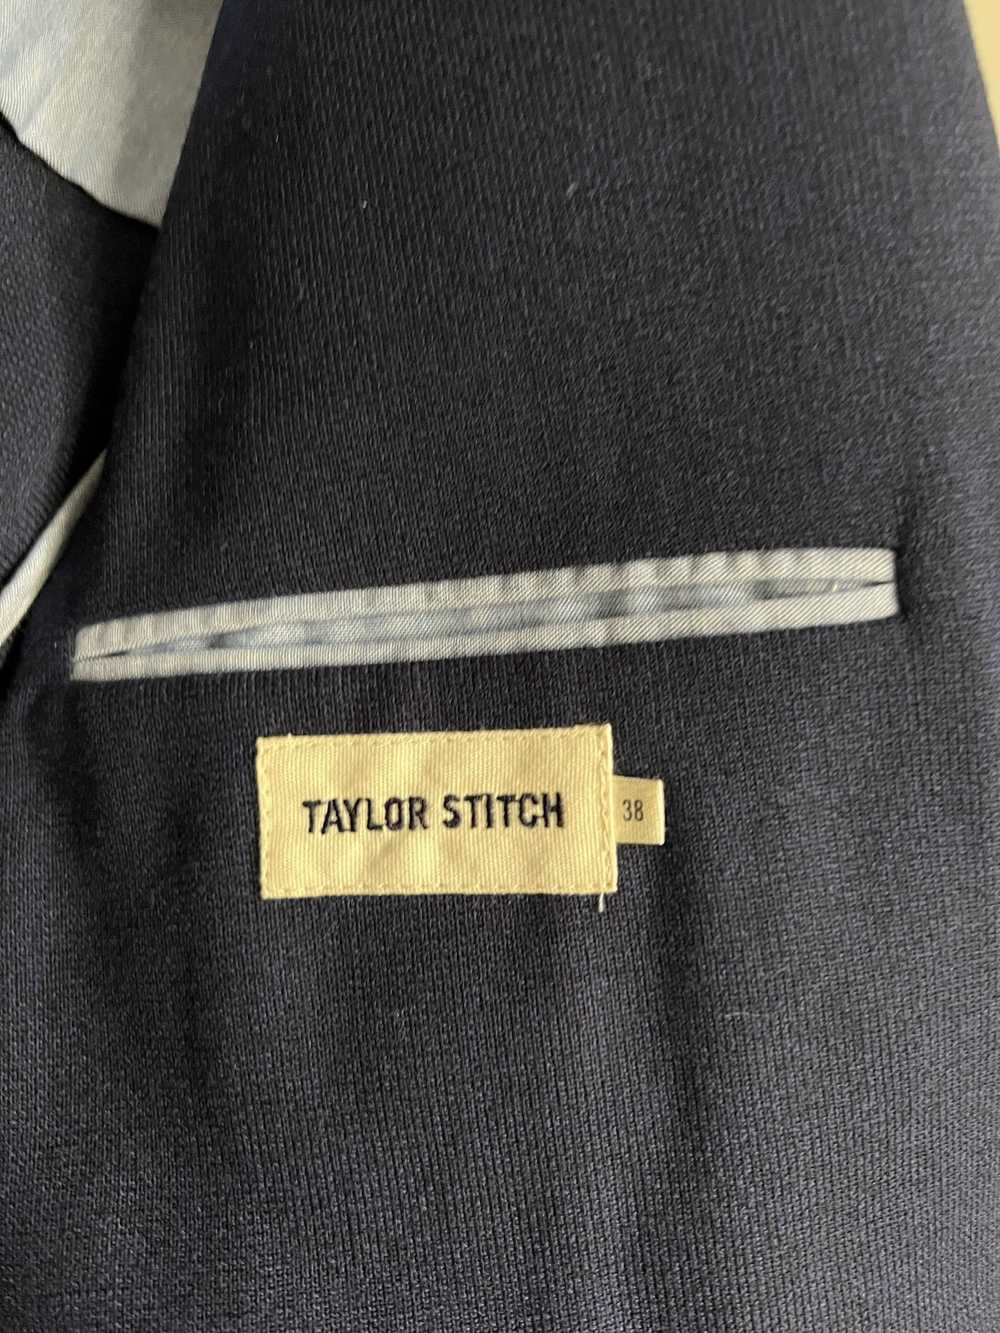 Taylor Stitch The Telegraph Blazer - image 2